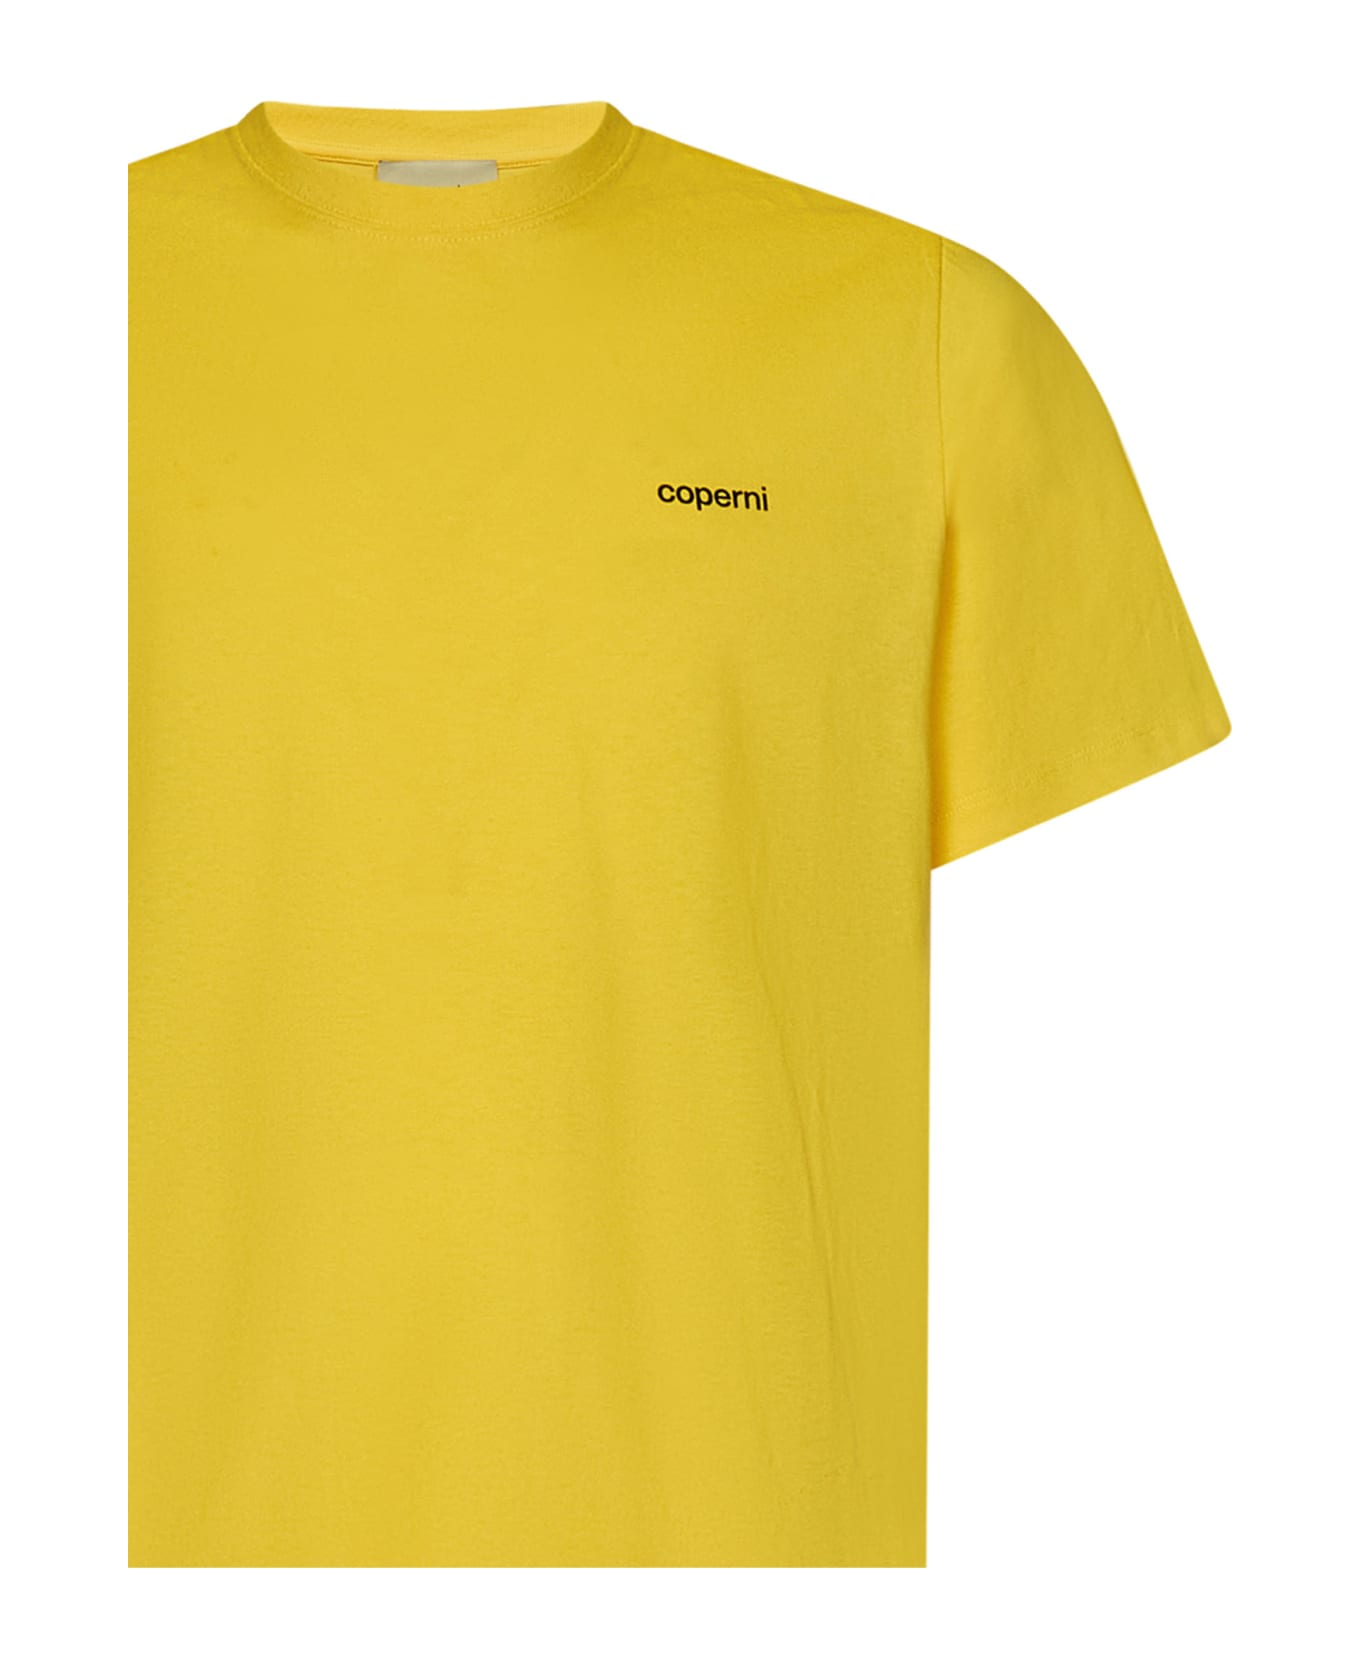 Coperni T-shirt - Yellow